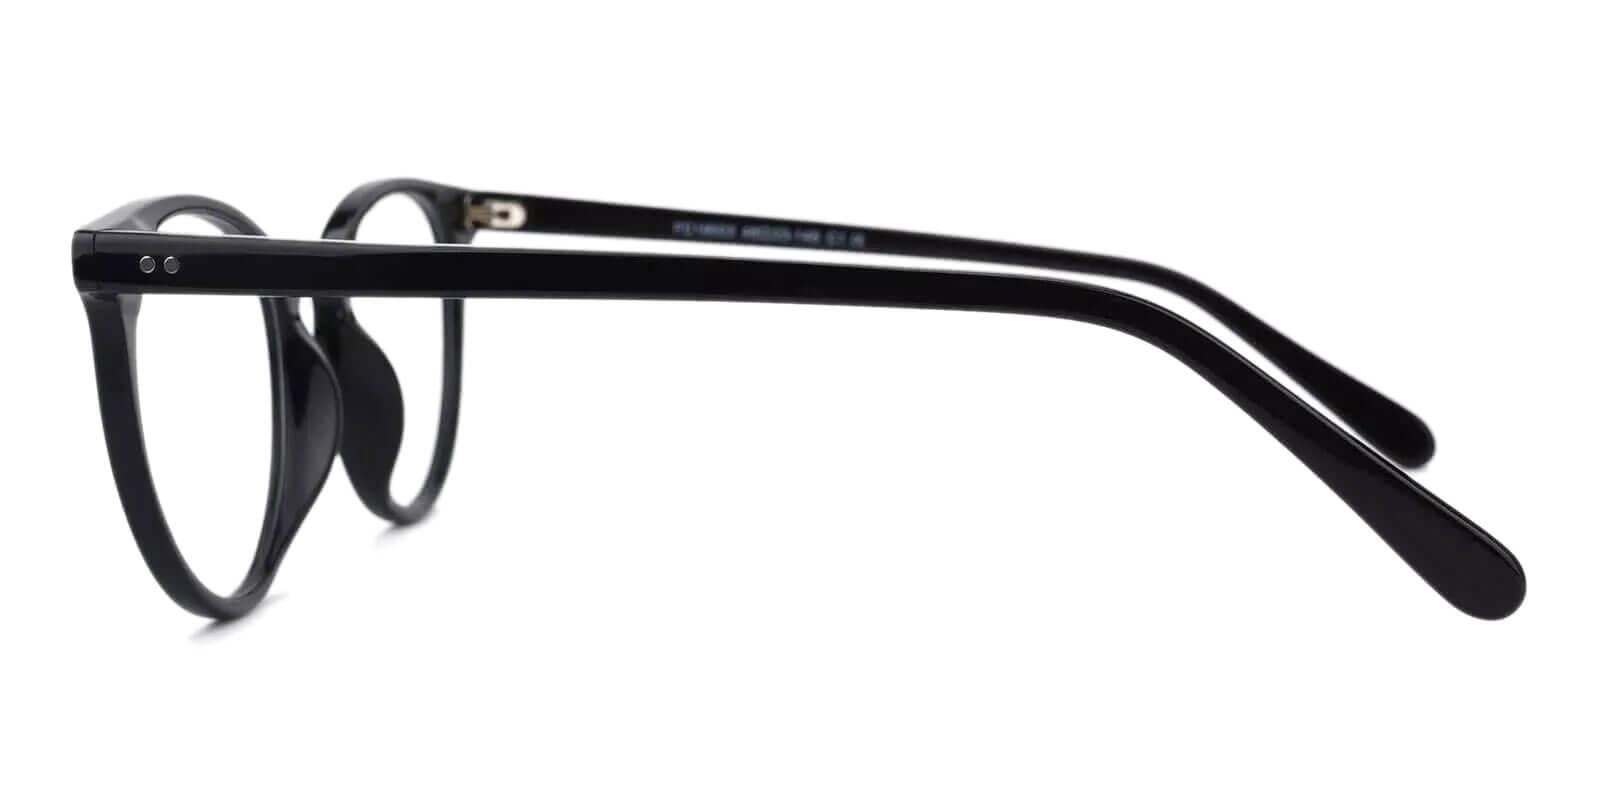 Mercury Black Acetate Eyeglasses , UniversalBridgeFit Frames from ABBE Glasses